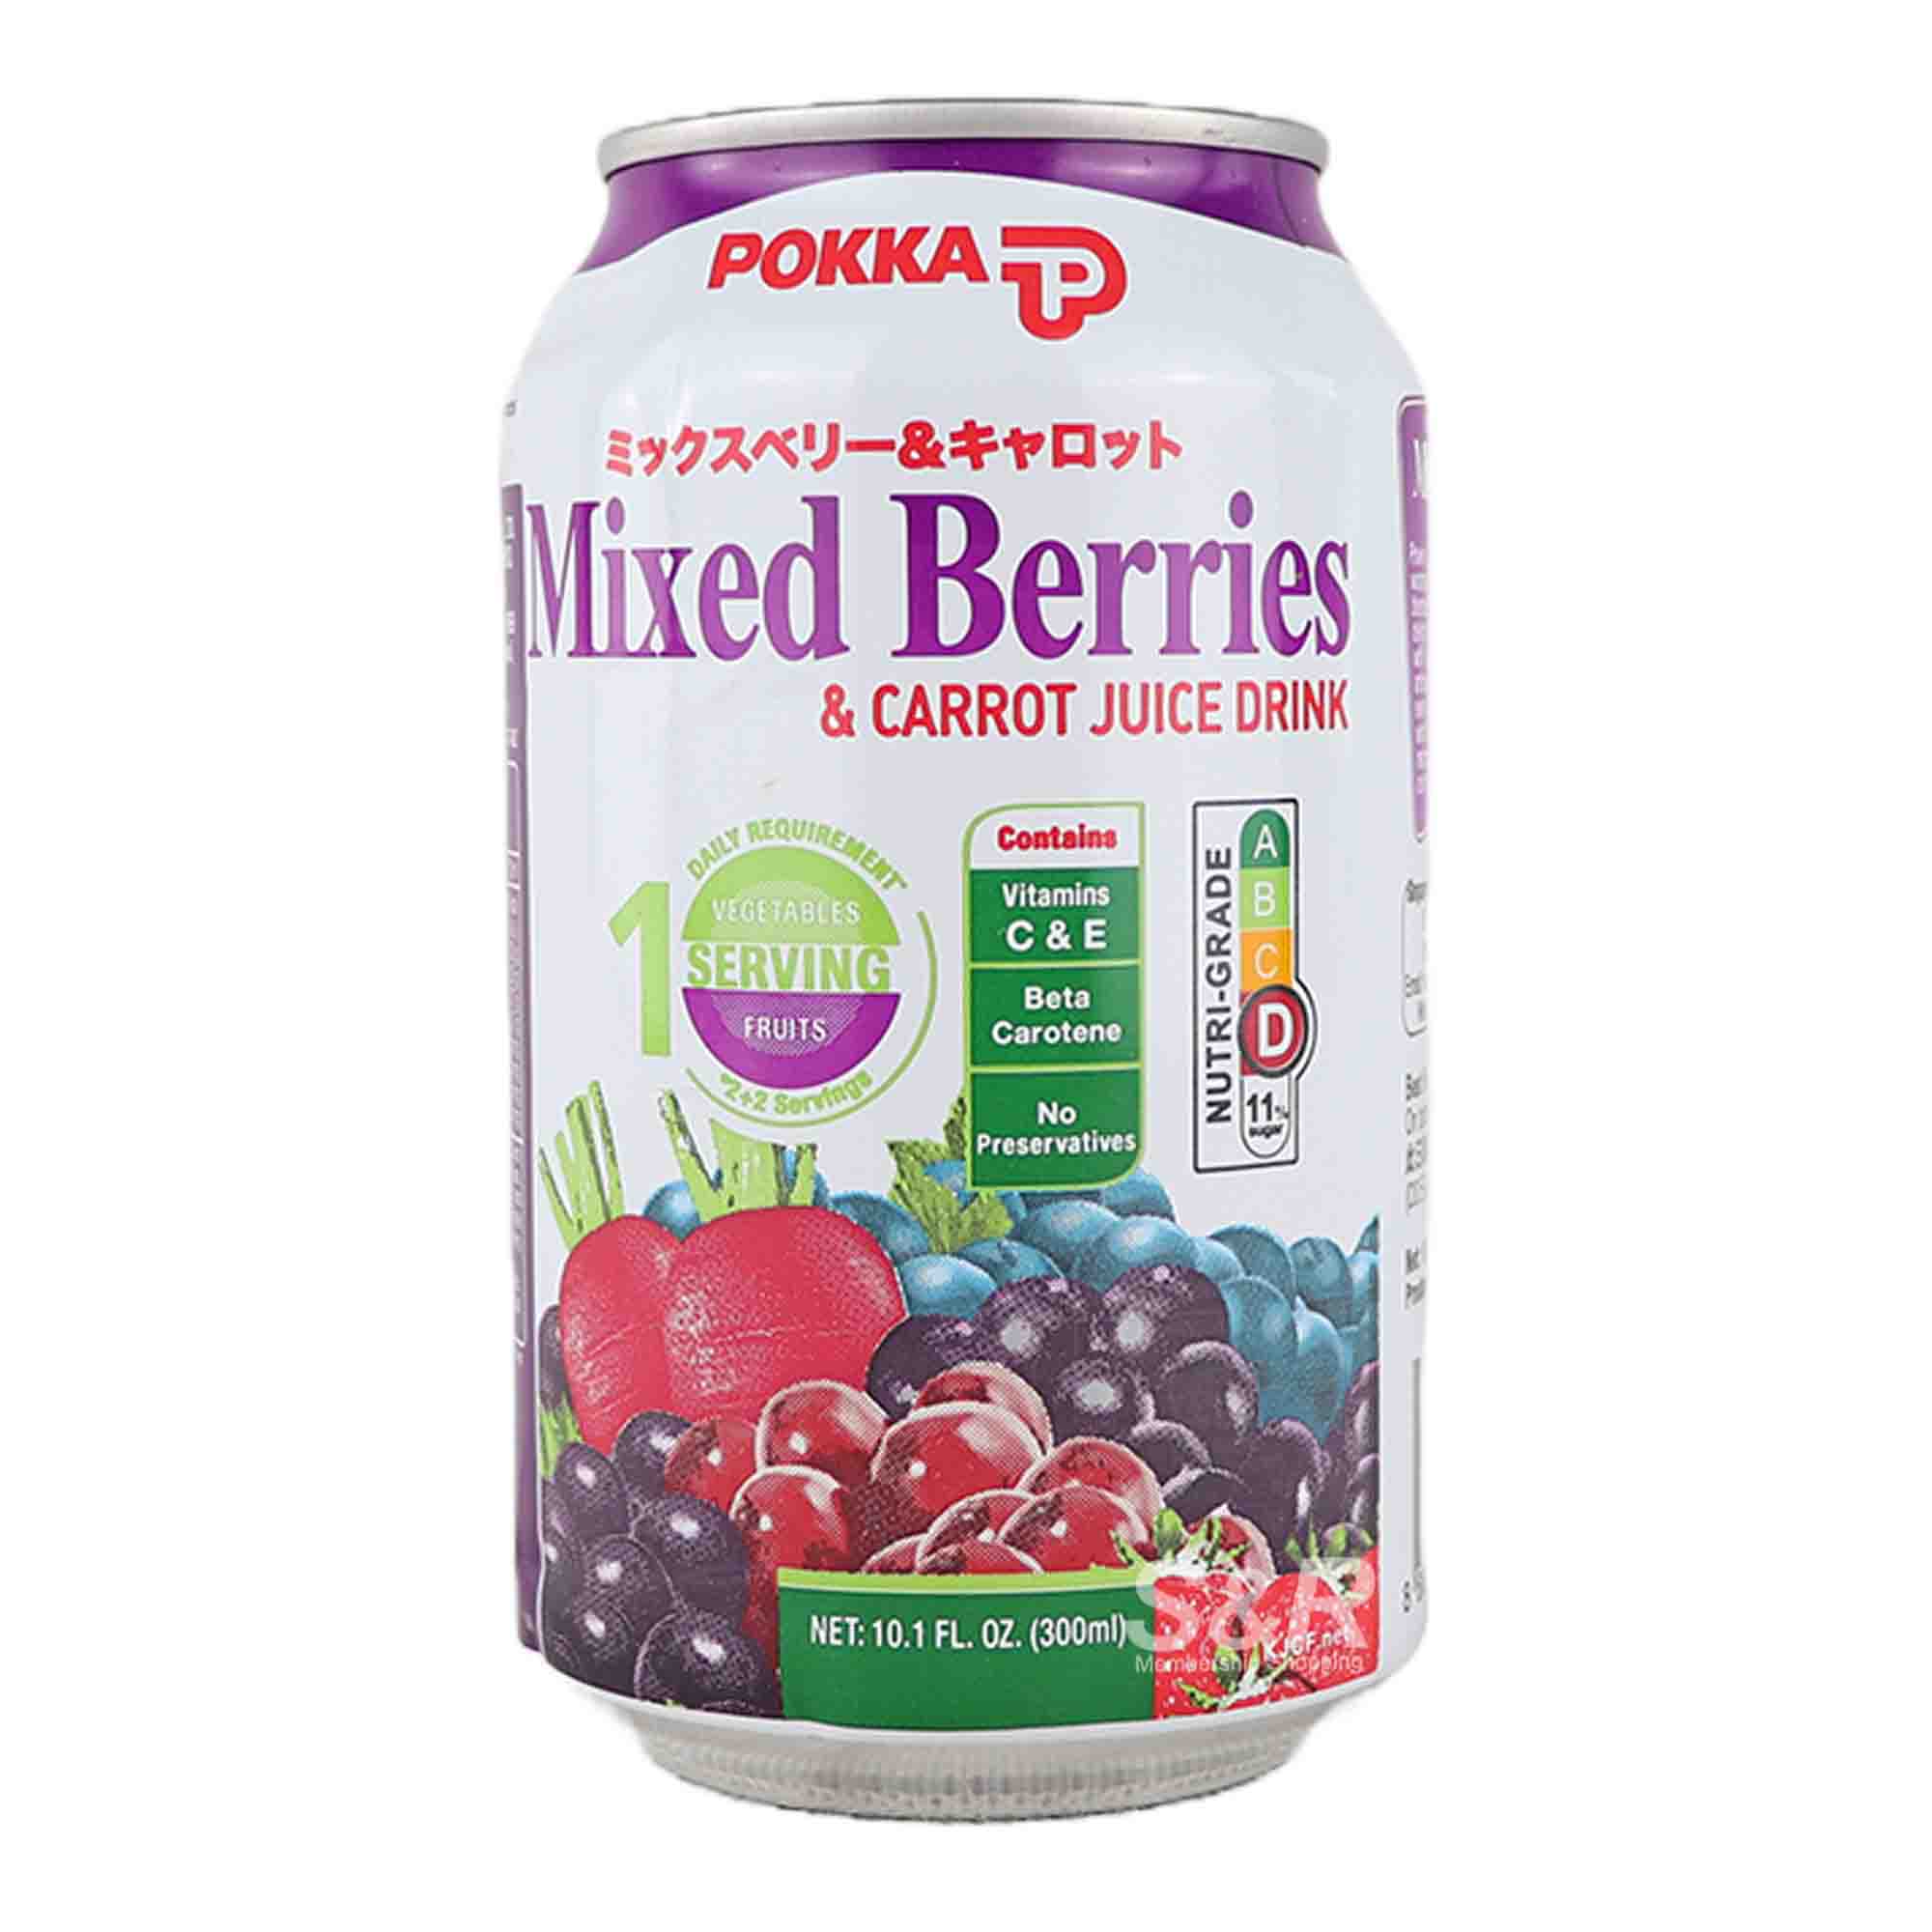 Pokka Mixed Berries & Carrot Juice Drink 300mL